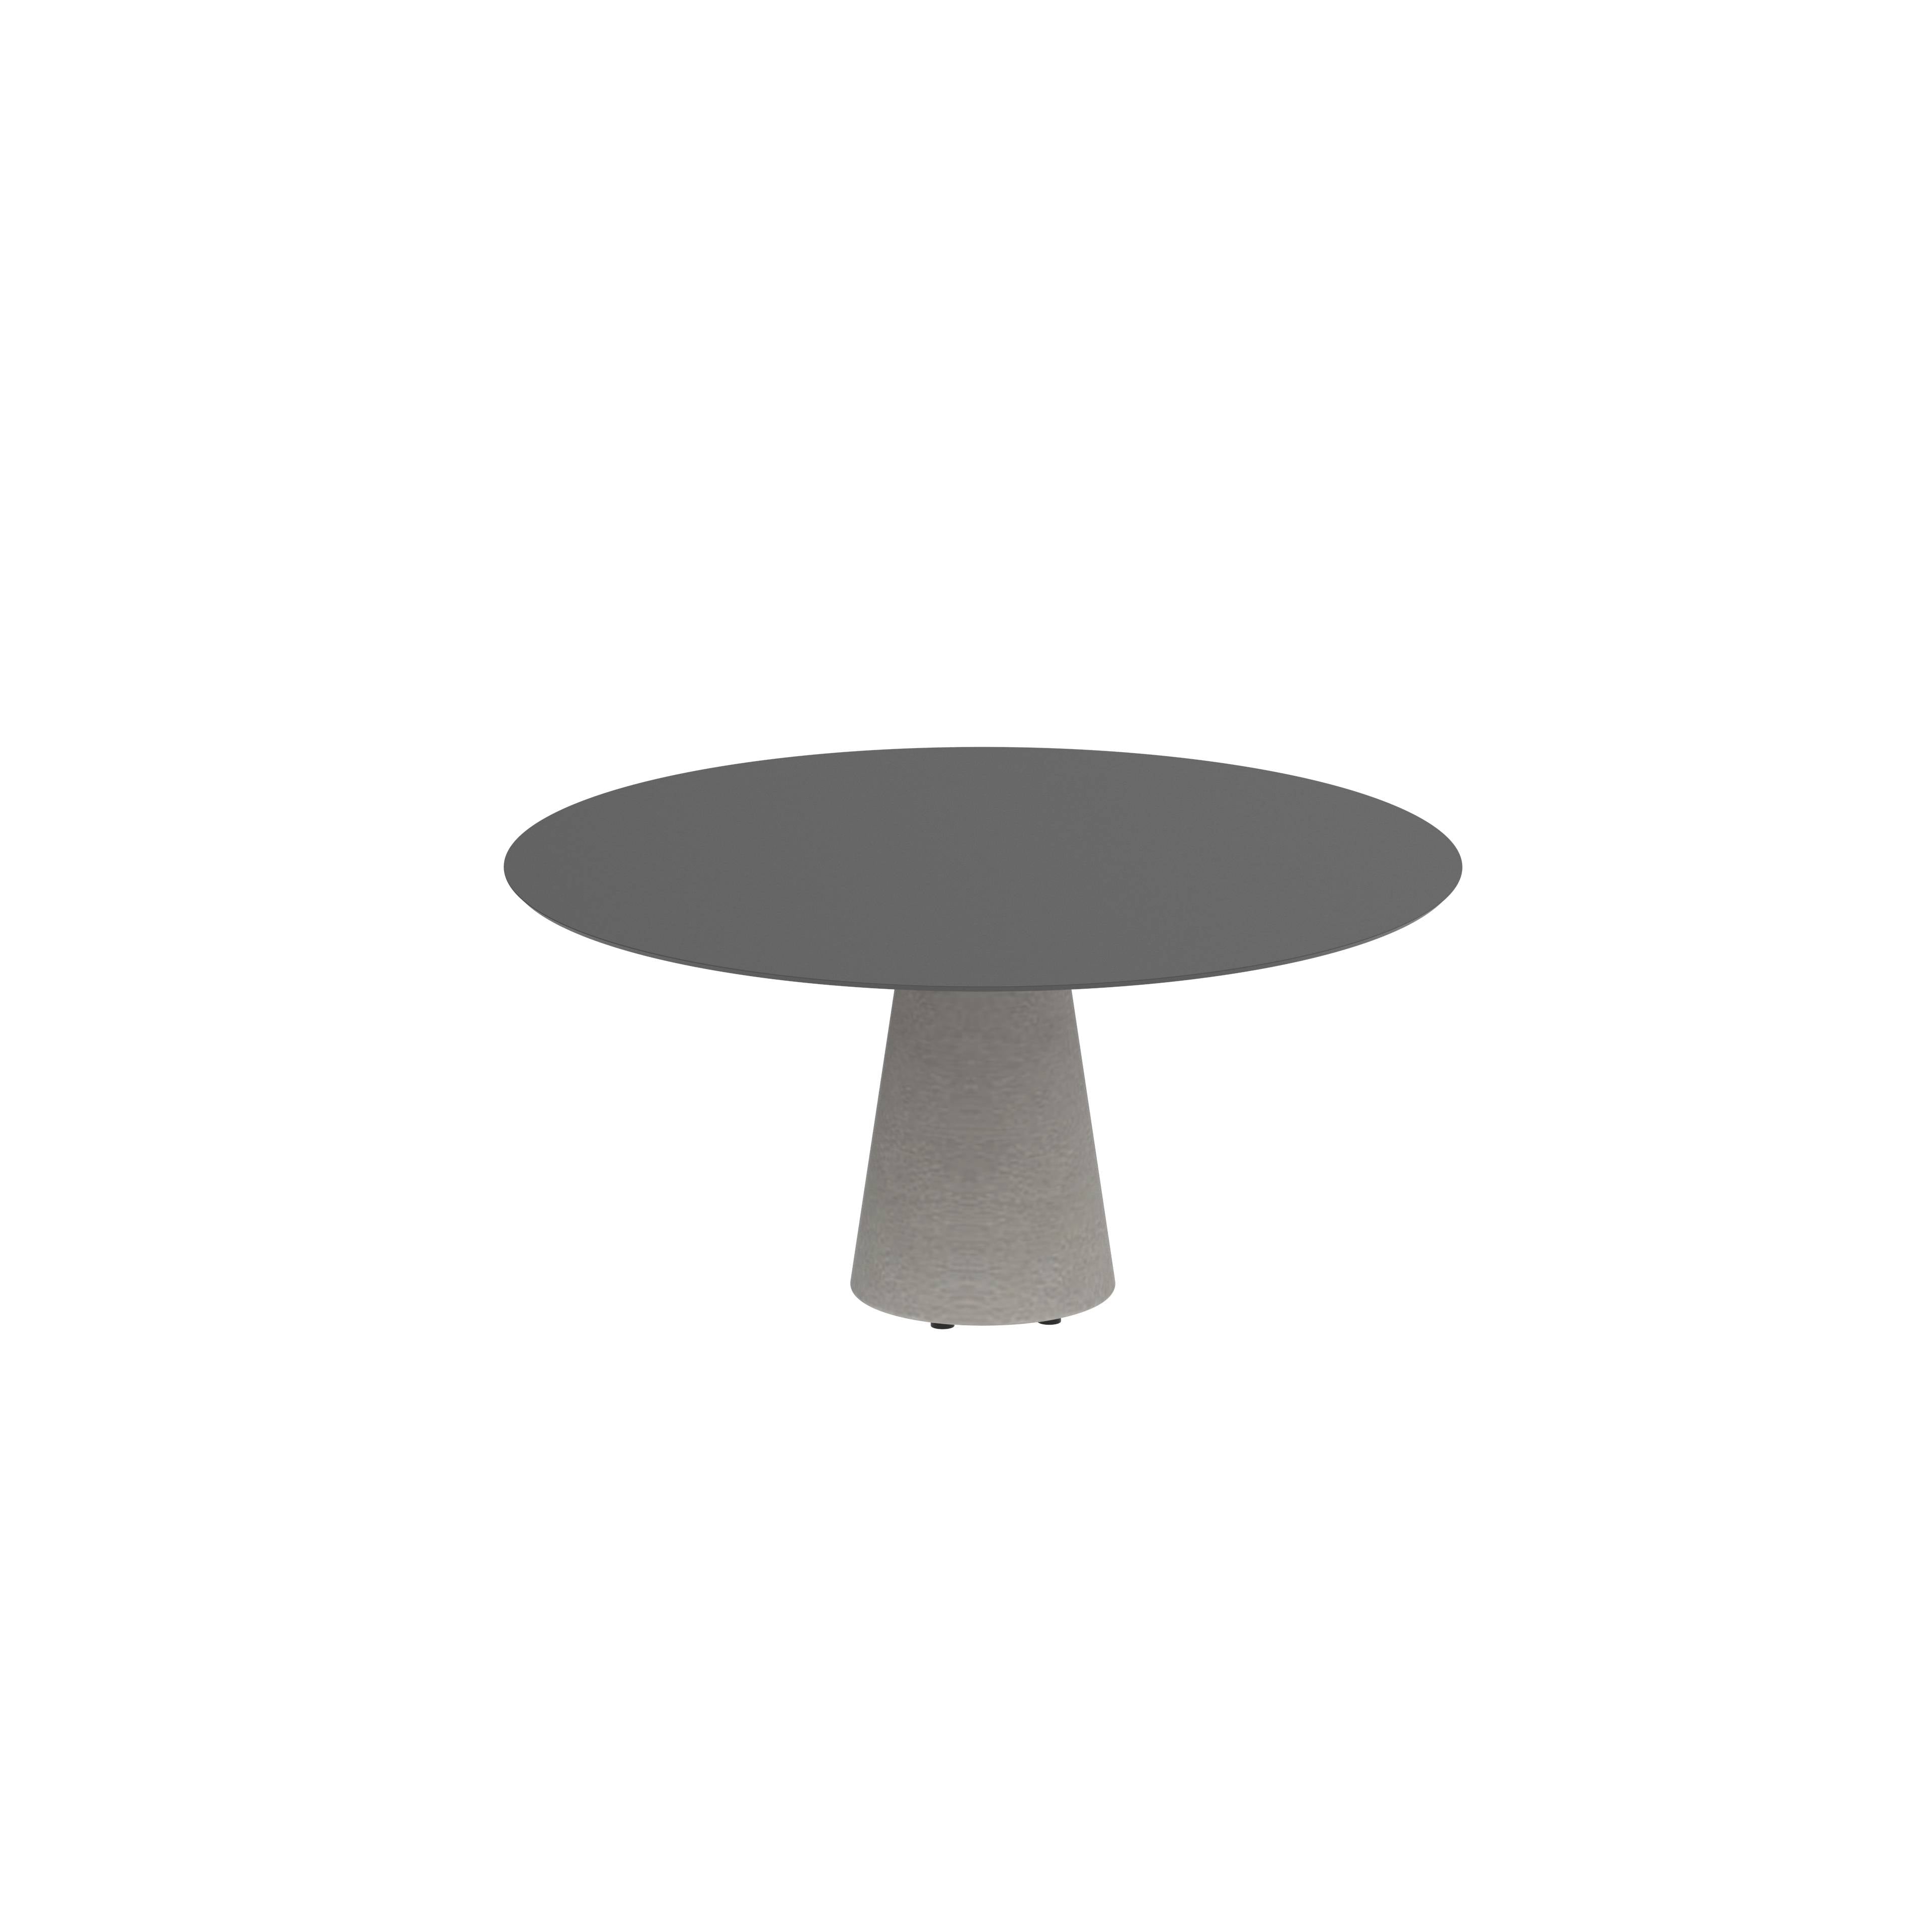 Conix Table Round Ø 160cm Legs Concrete Cement Grey - Tabletop Ceramic Black